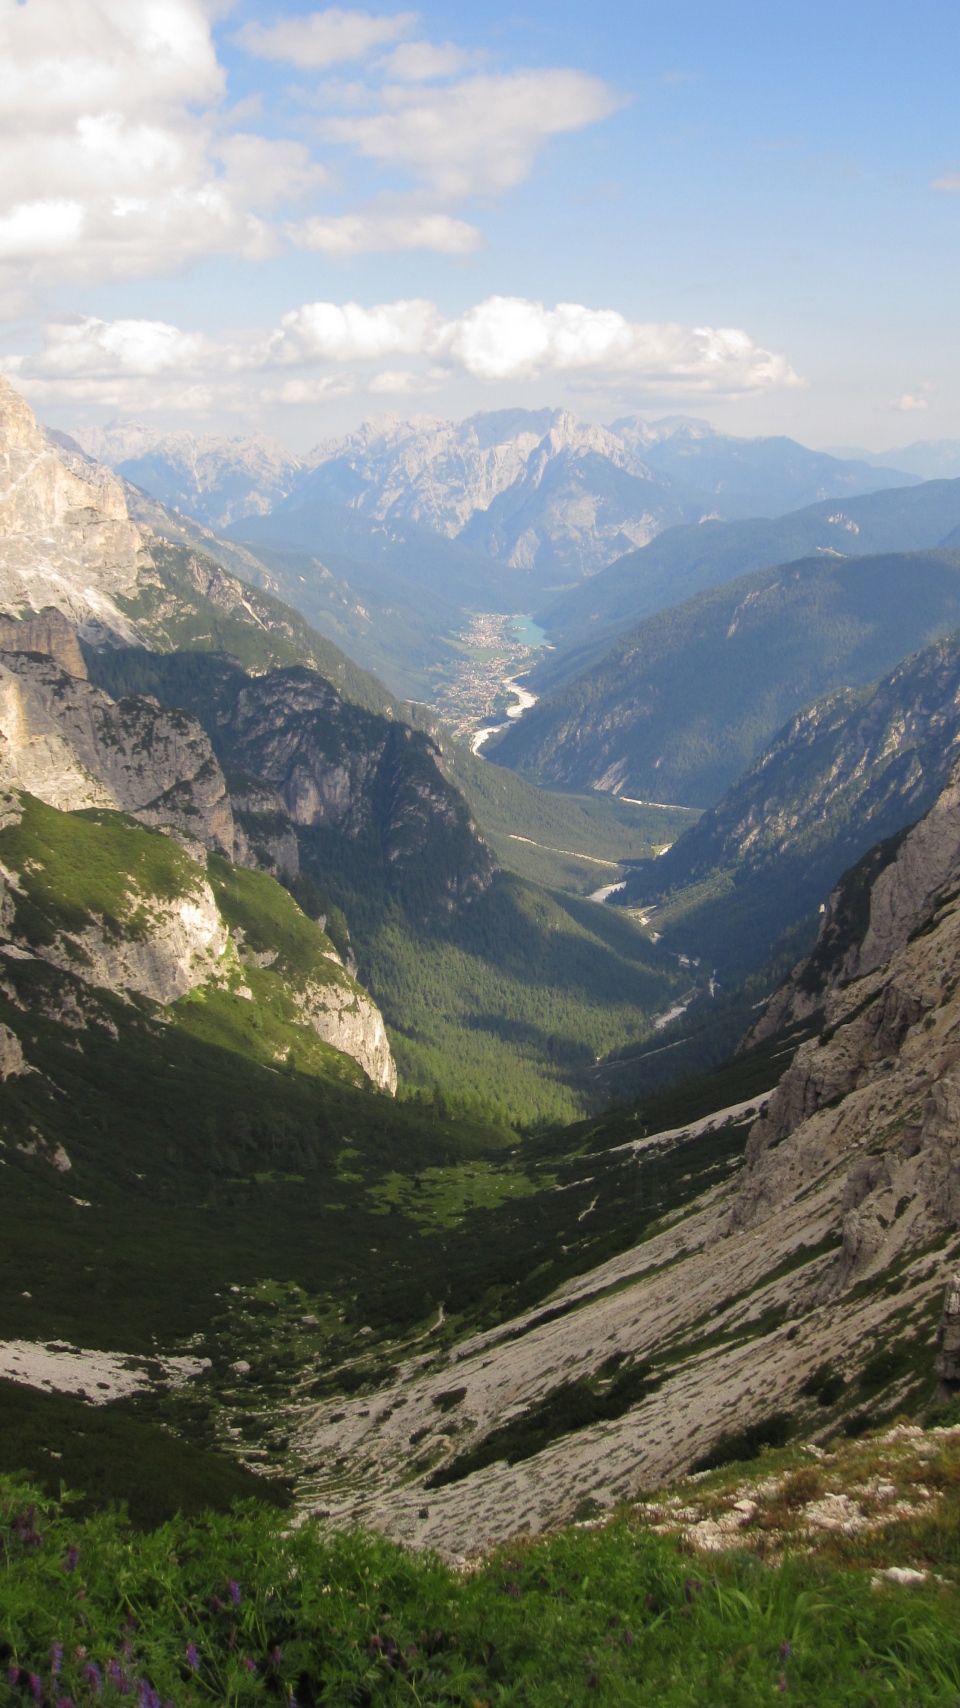 The Dolomites/Italian Alps